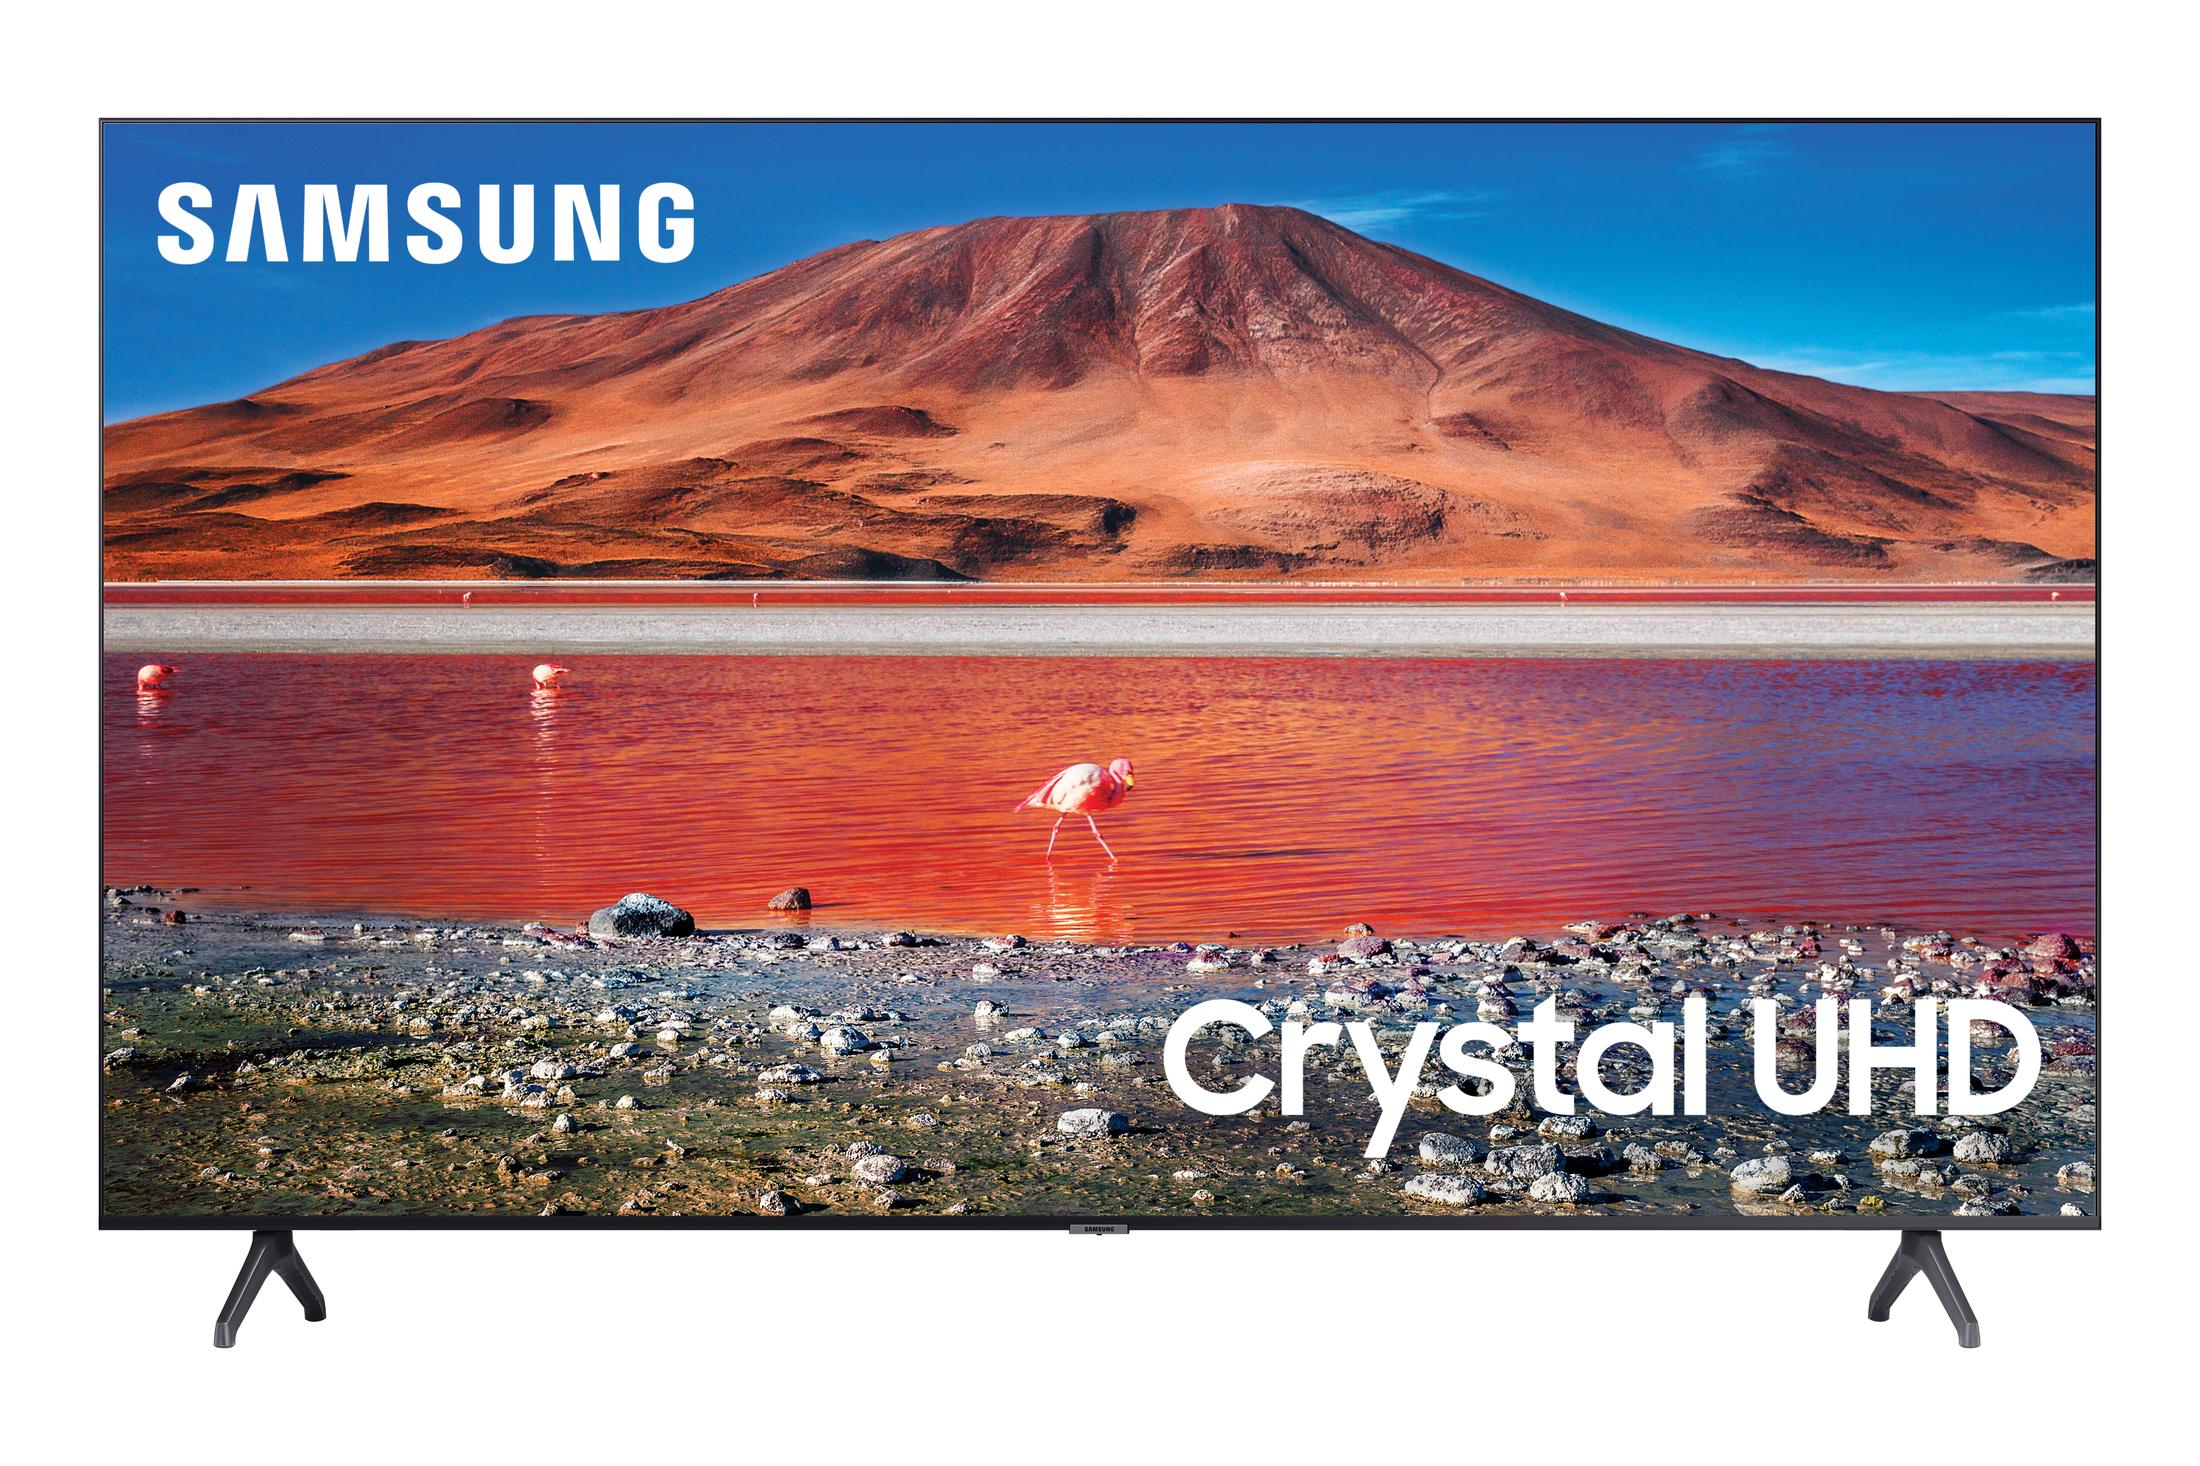 SAMSUNG 55" Class 4K Crystal UHD (2160P) LED Smart TV with HDR UN55TU7000B - image 1 of 10